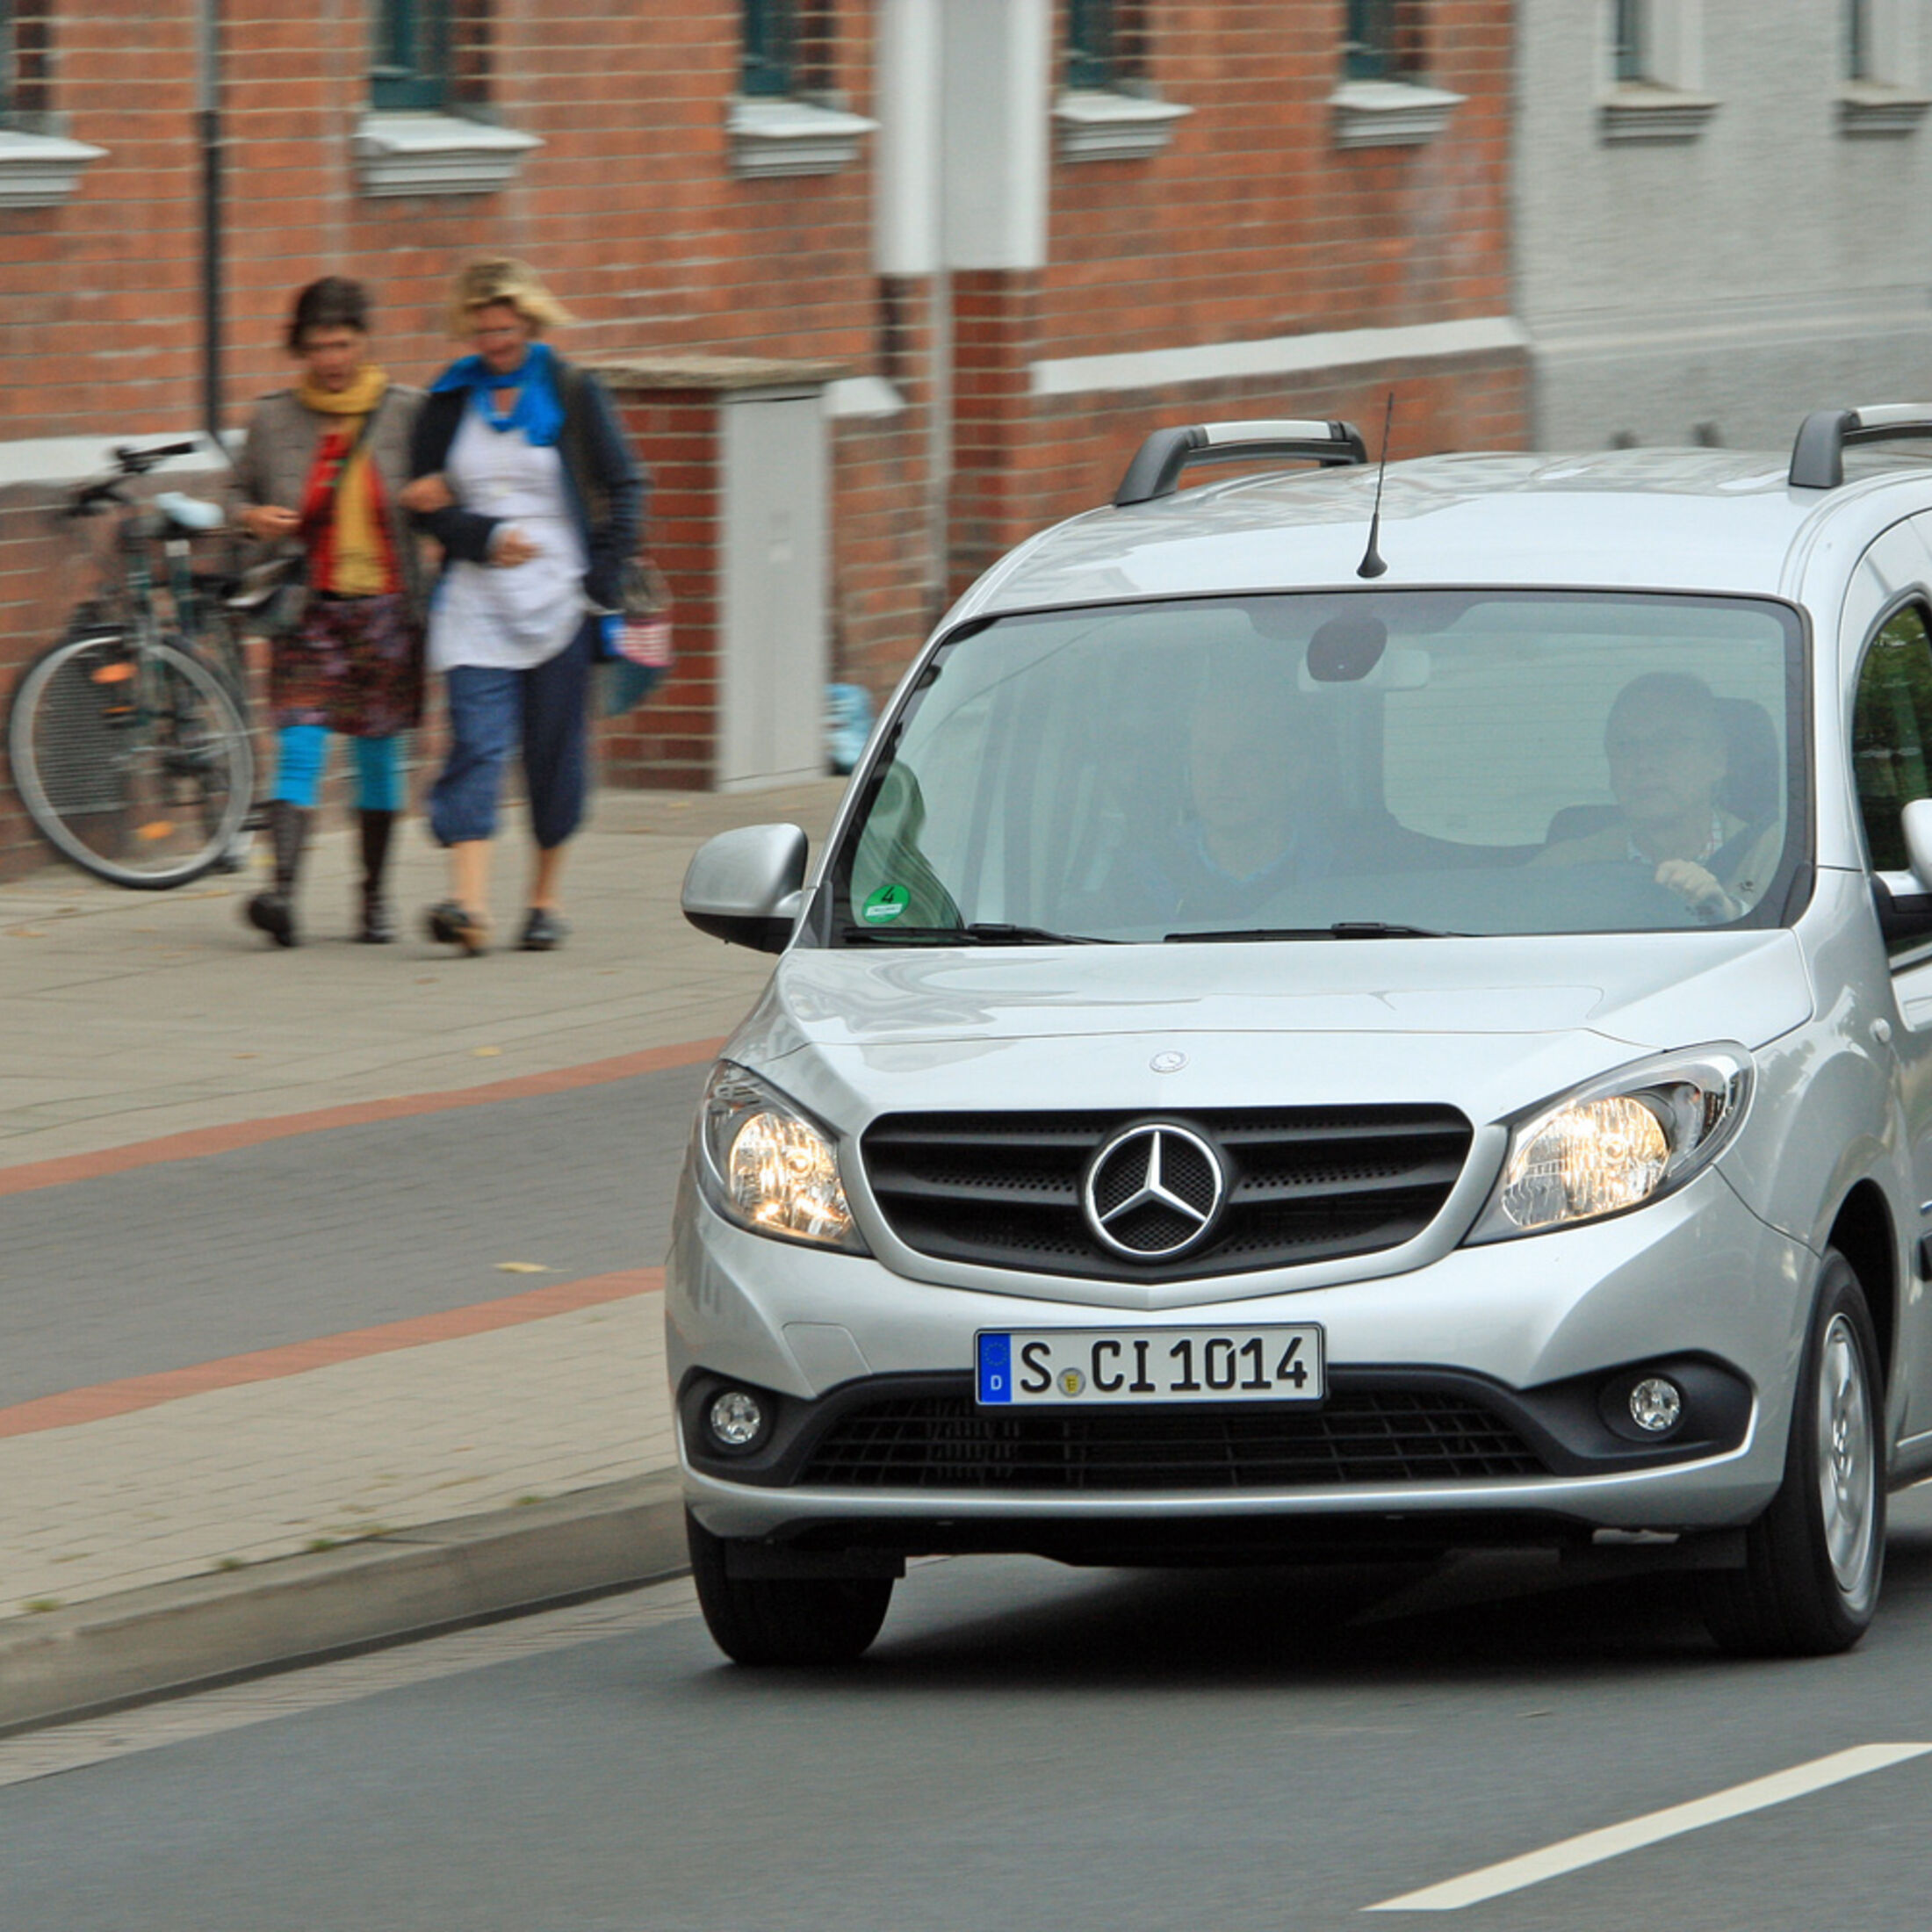 Mercedes Citan 109 CDI im Fahrbericht: Familien-Transporter